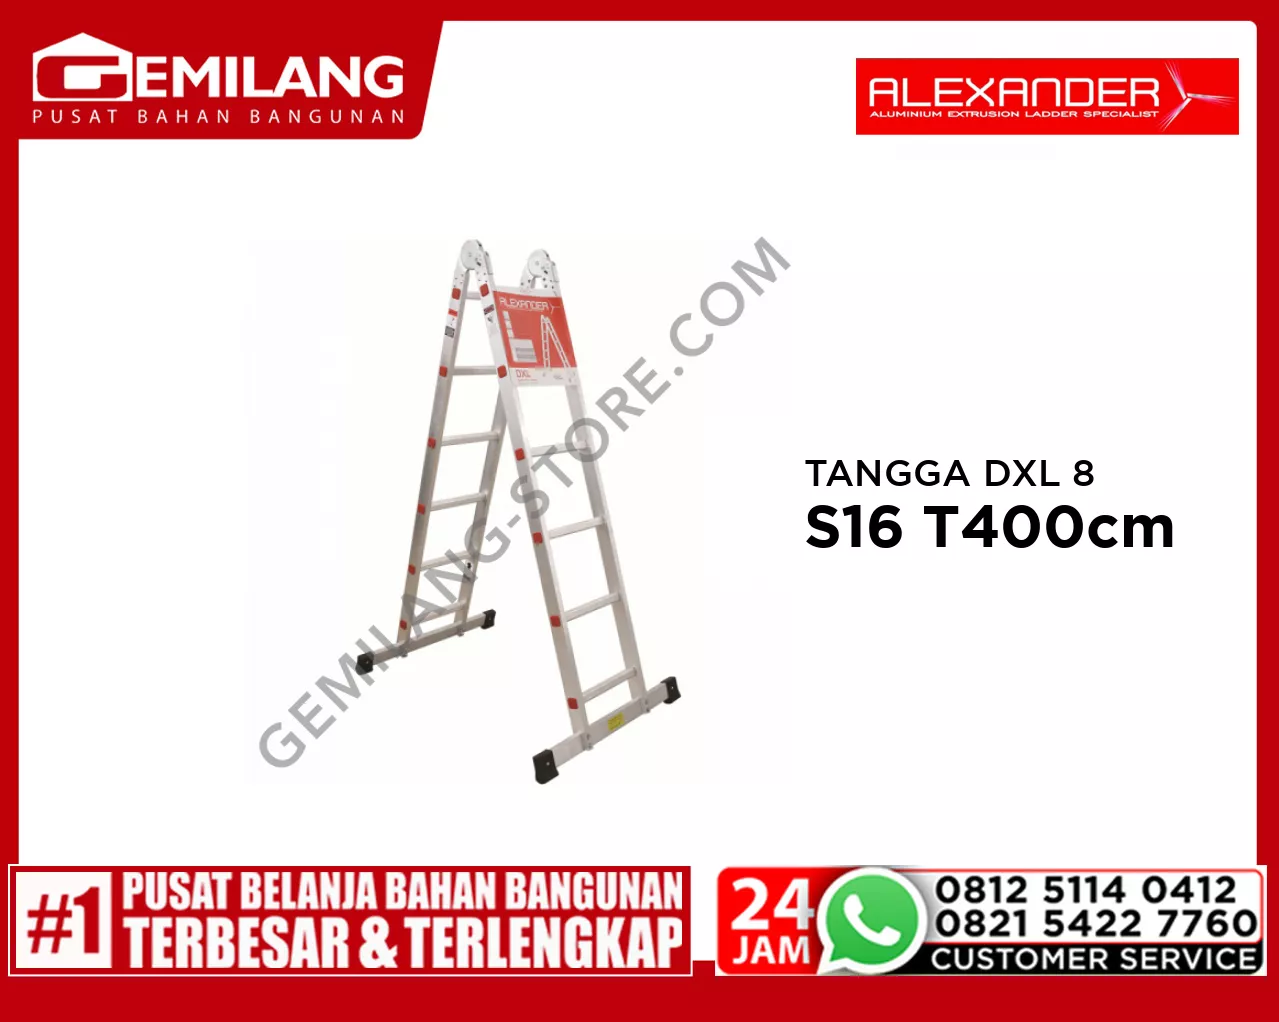 ALEXANDER TANGGA DXL 8 STEPS 16 T400cm